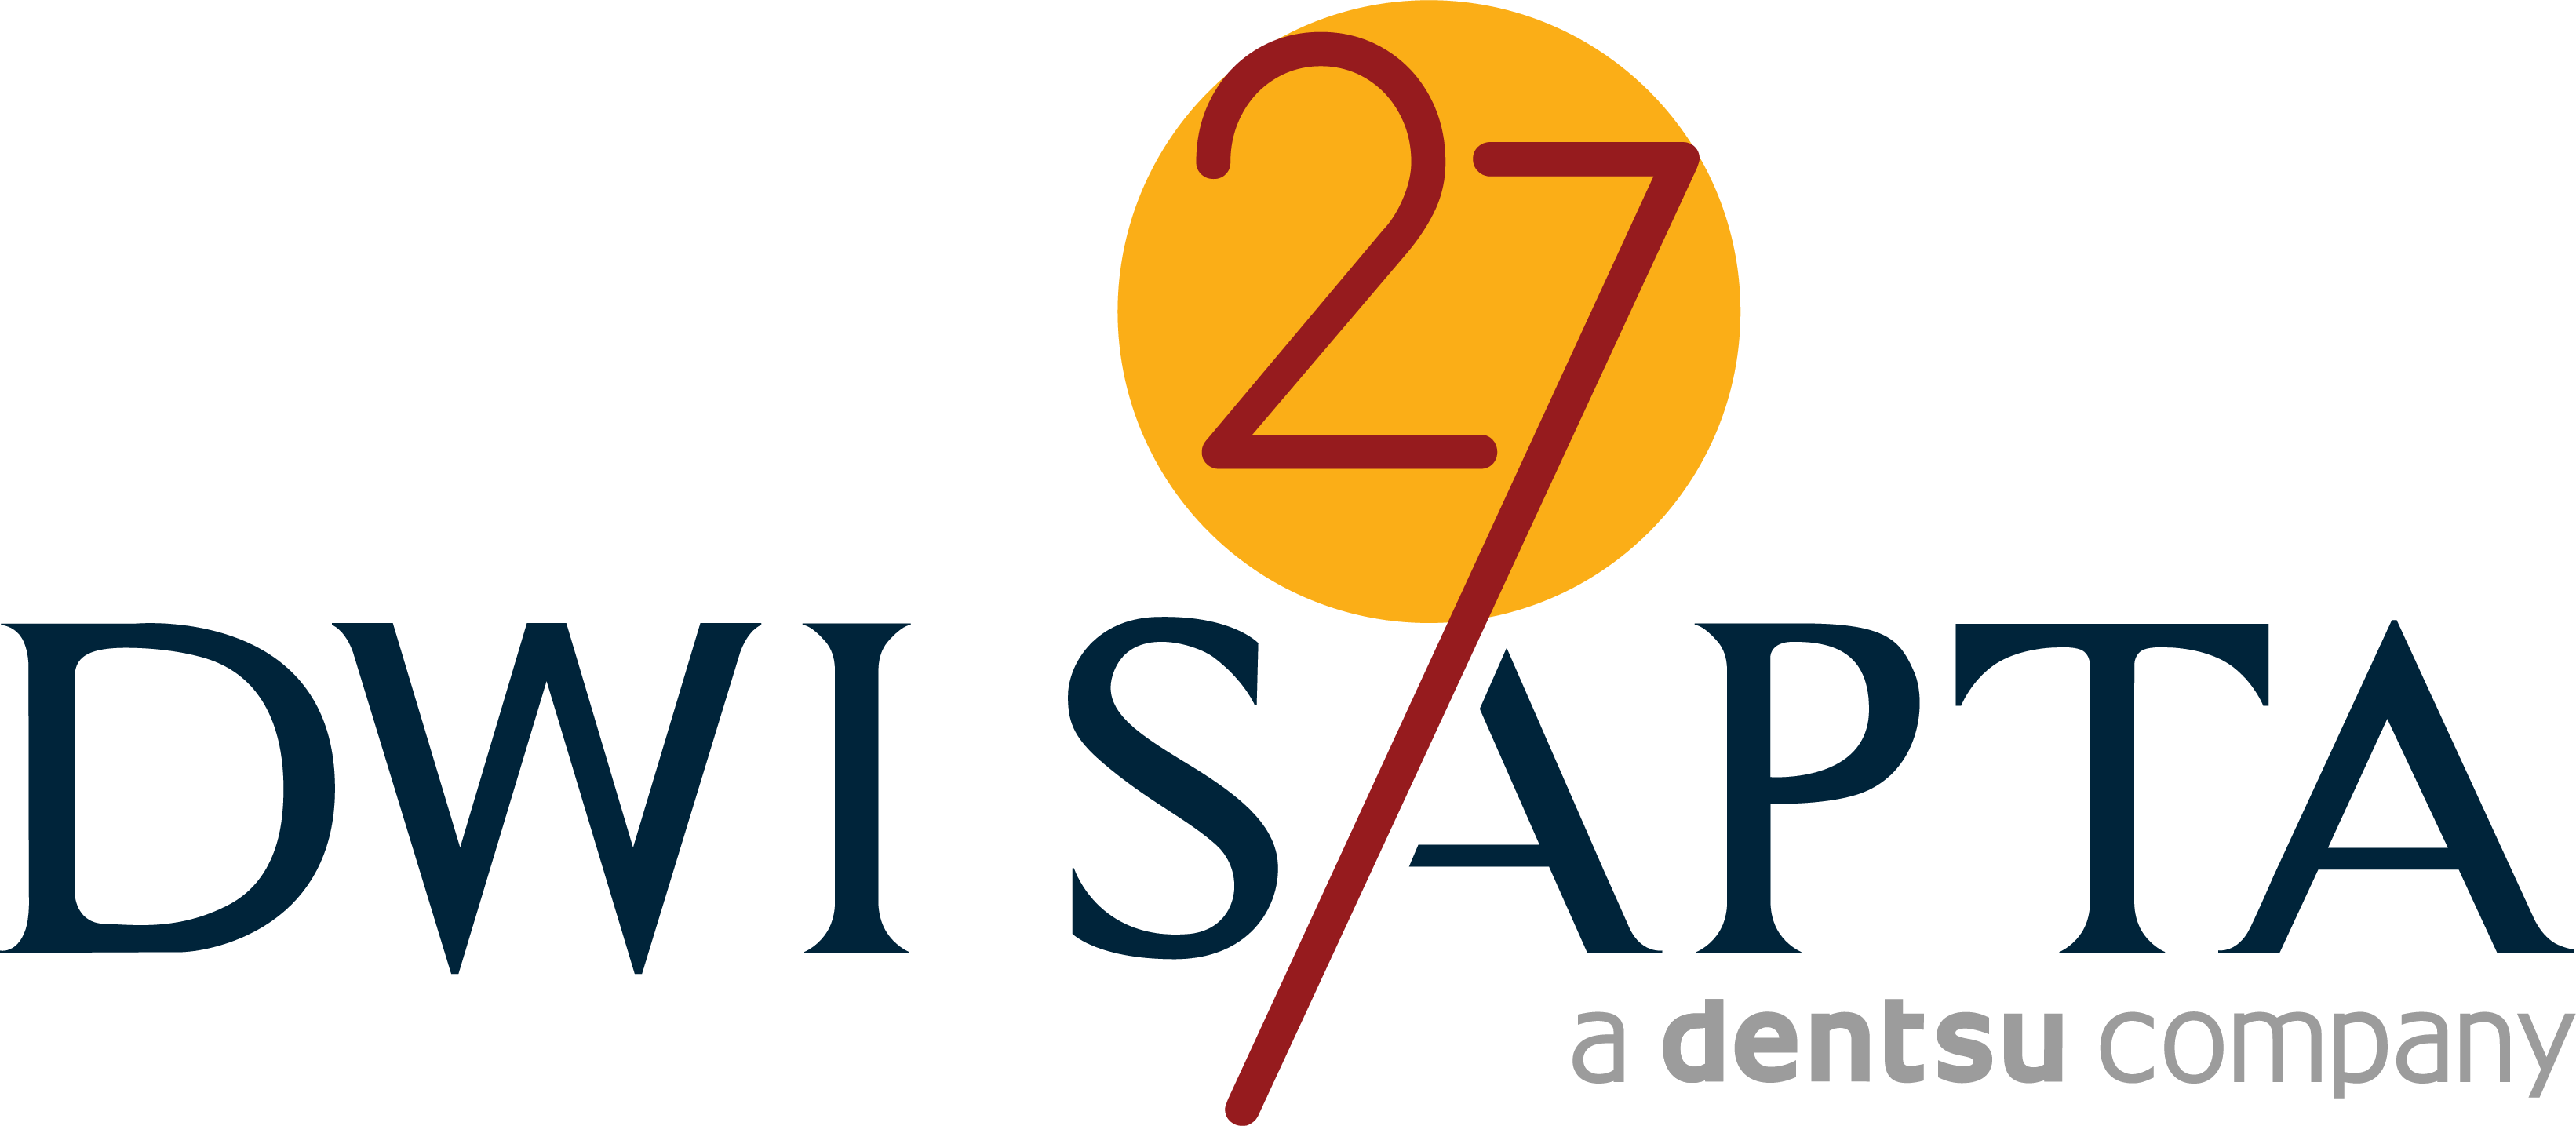 dentsu DwiSapta Media logo